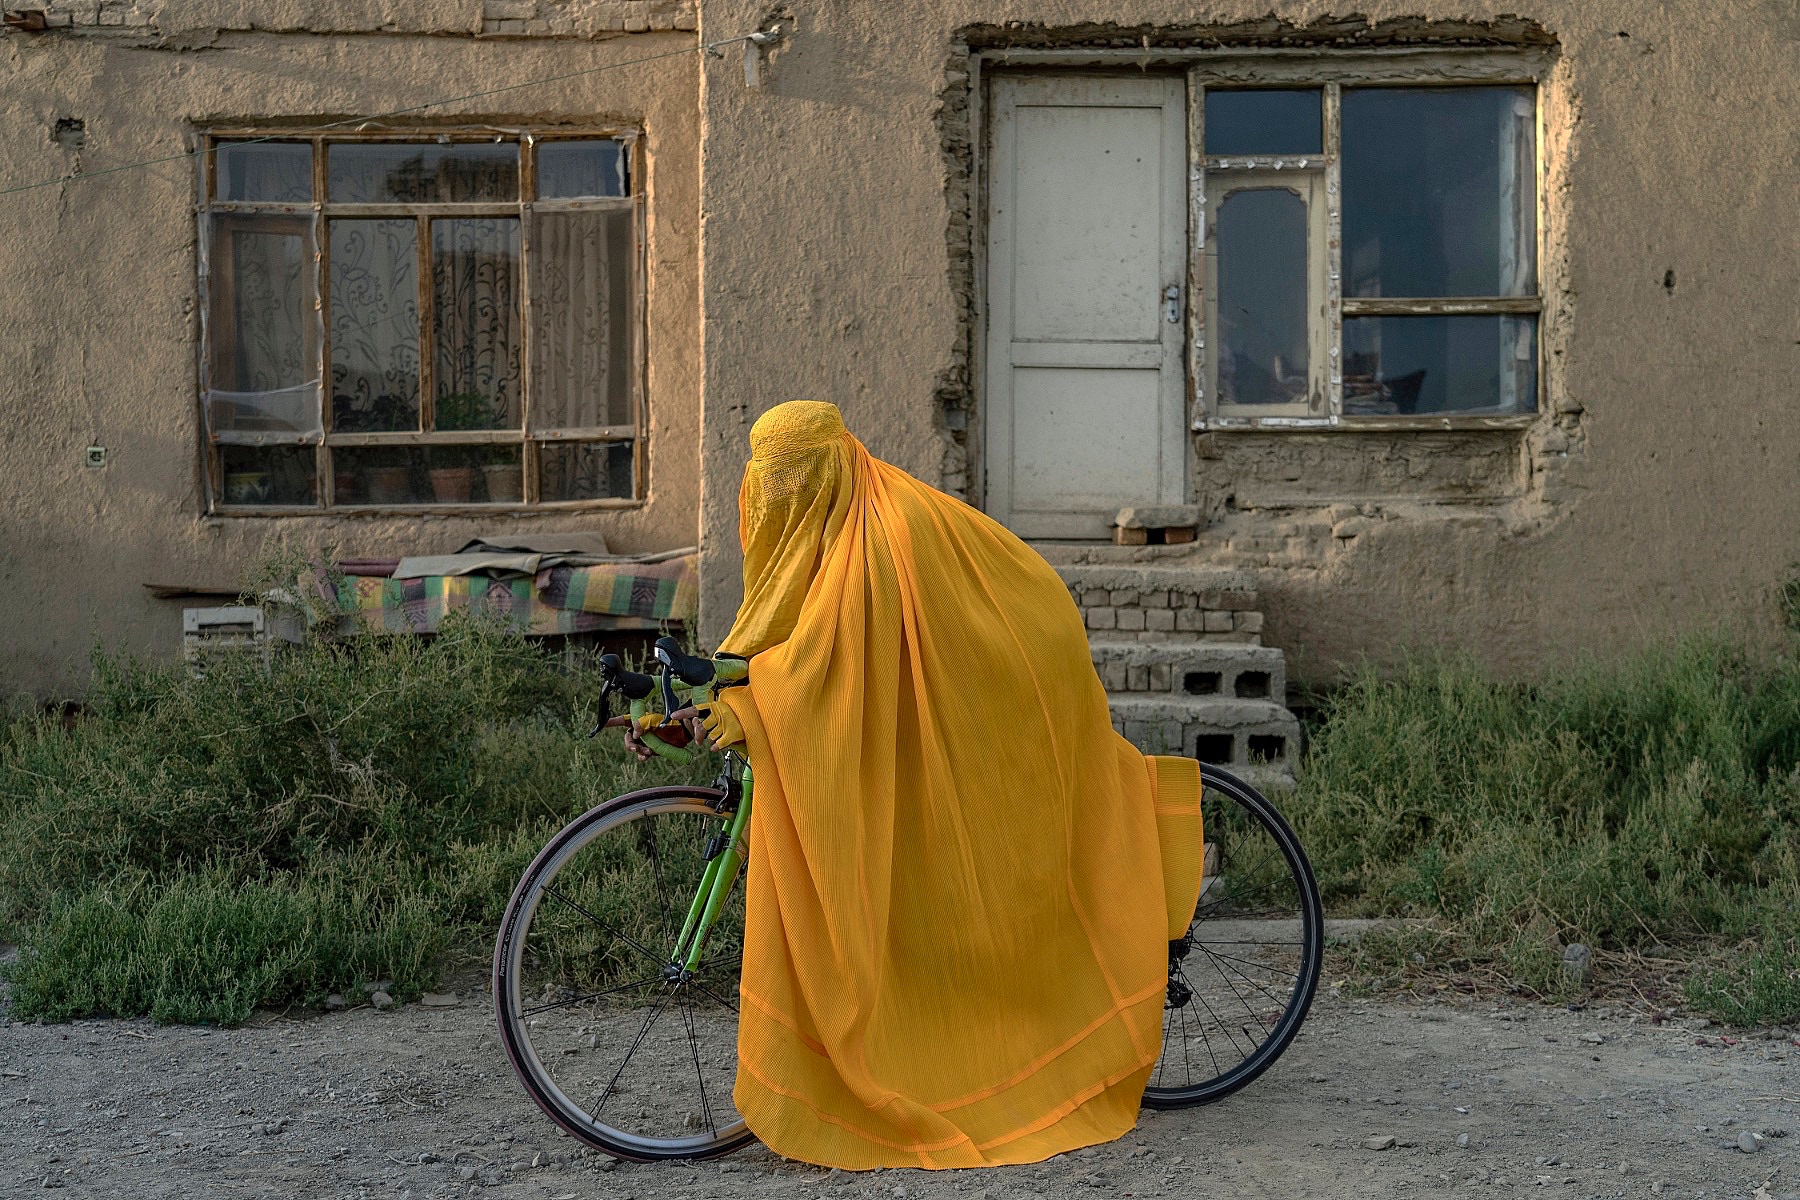 Ebrahim	Noroozi - Afghan women athletes barred from play, fear Taliban threats - Felix Schoeller Photoaward